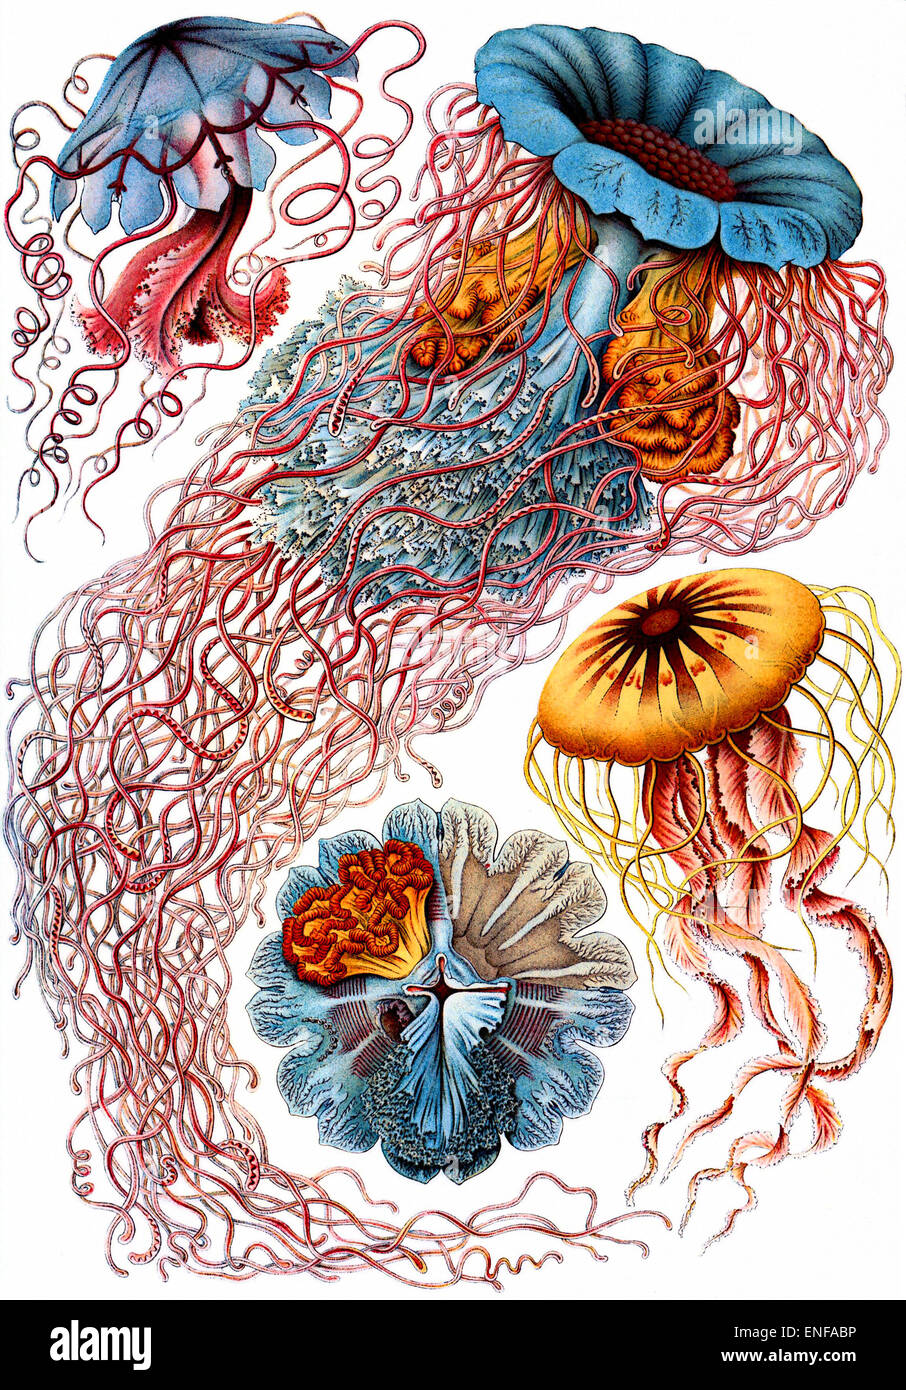 Discomedusae (Medusa), por Ernst Haeckel, 1904 - sólo para uso editorial. Foto de stock